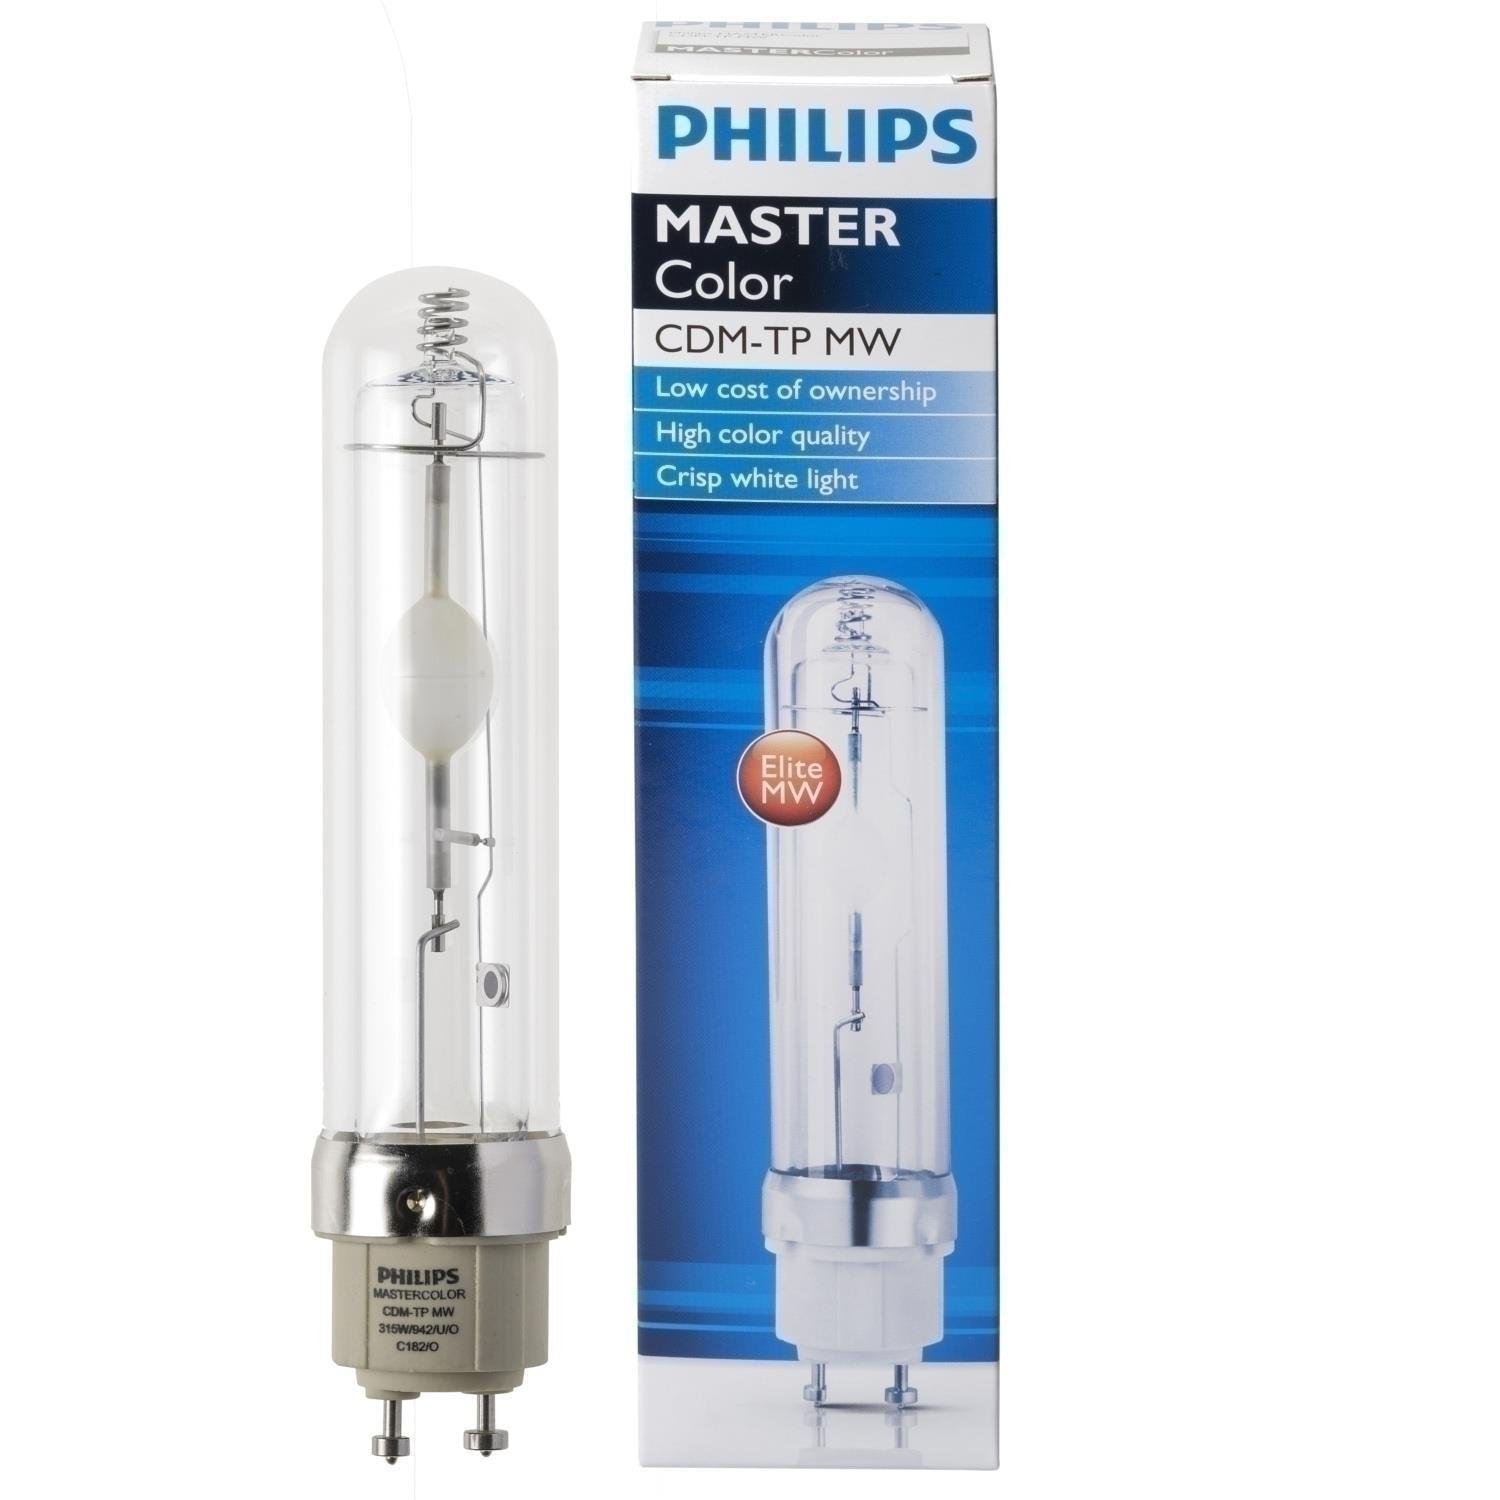 Philips Mastercolour CDM-T Elite MW 942 Dual 315W unter Beleuchtung > Natriumdampflampen > Leuchtmittel